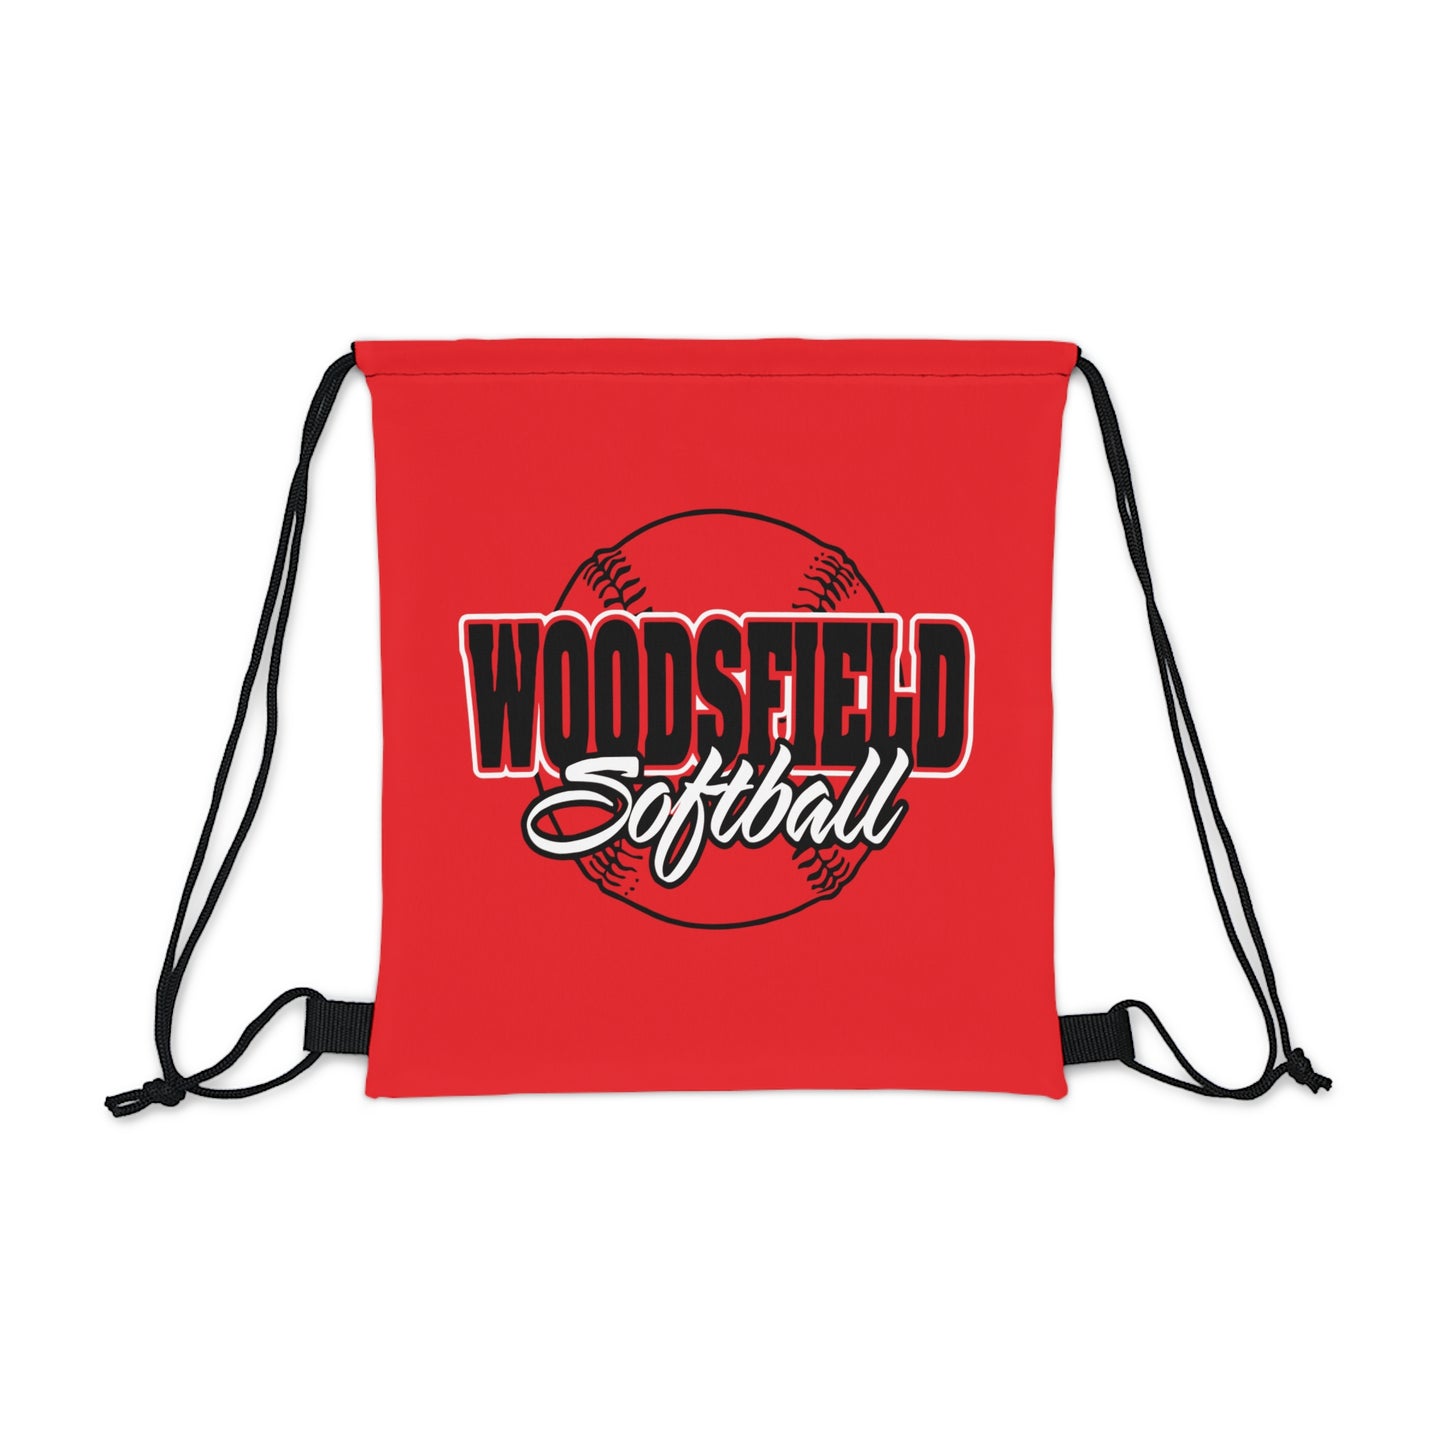 Outdoor Drawstring Bag - Wdsf. Softball